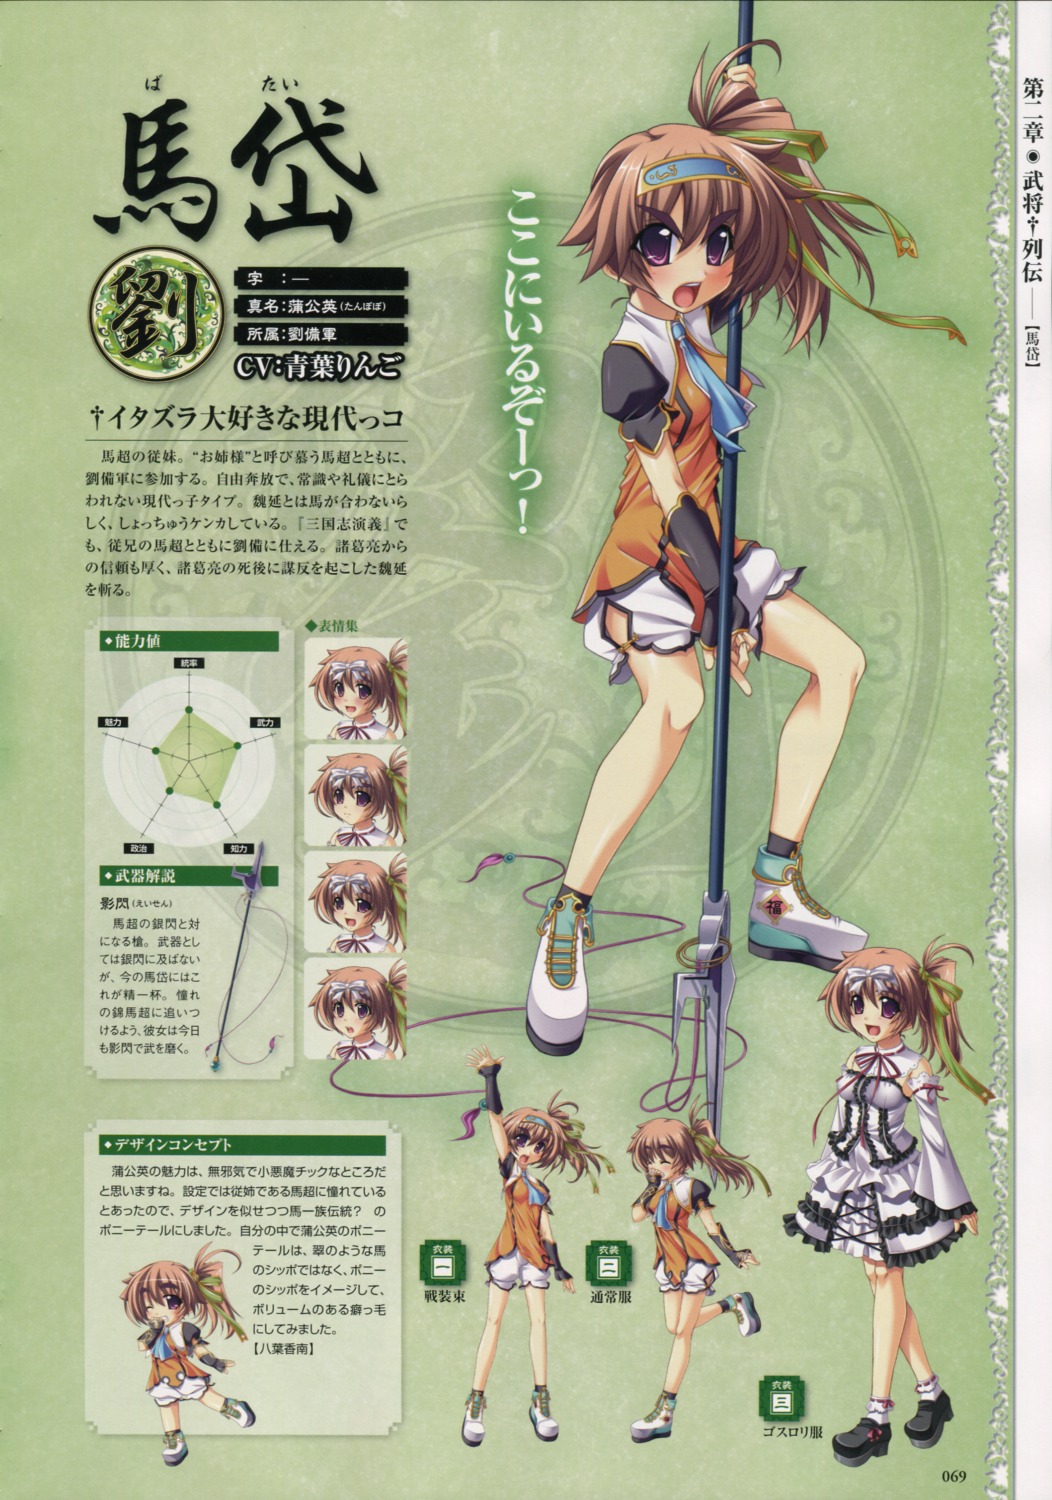 baseson batai character_design chibi expression koihime_musou lolita_fashion profile_page weapon